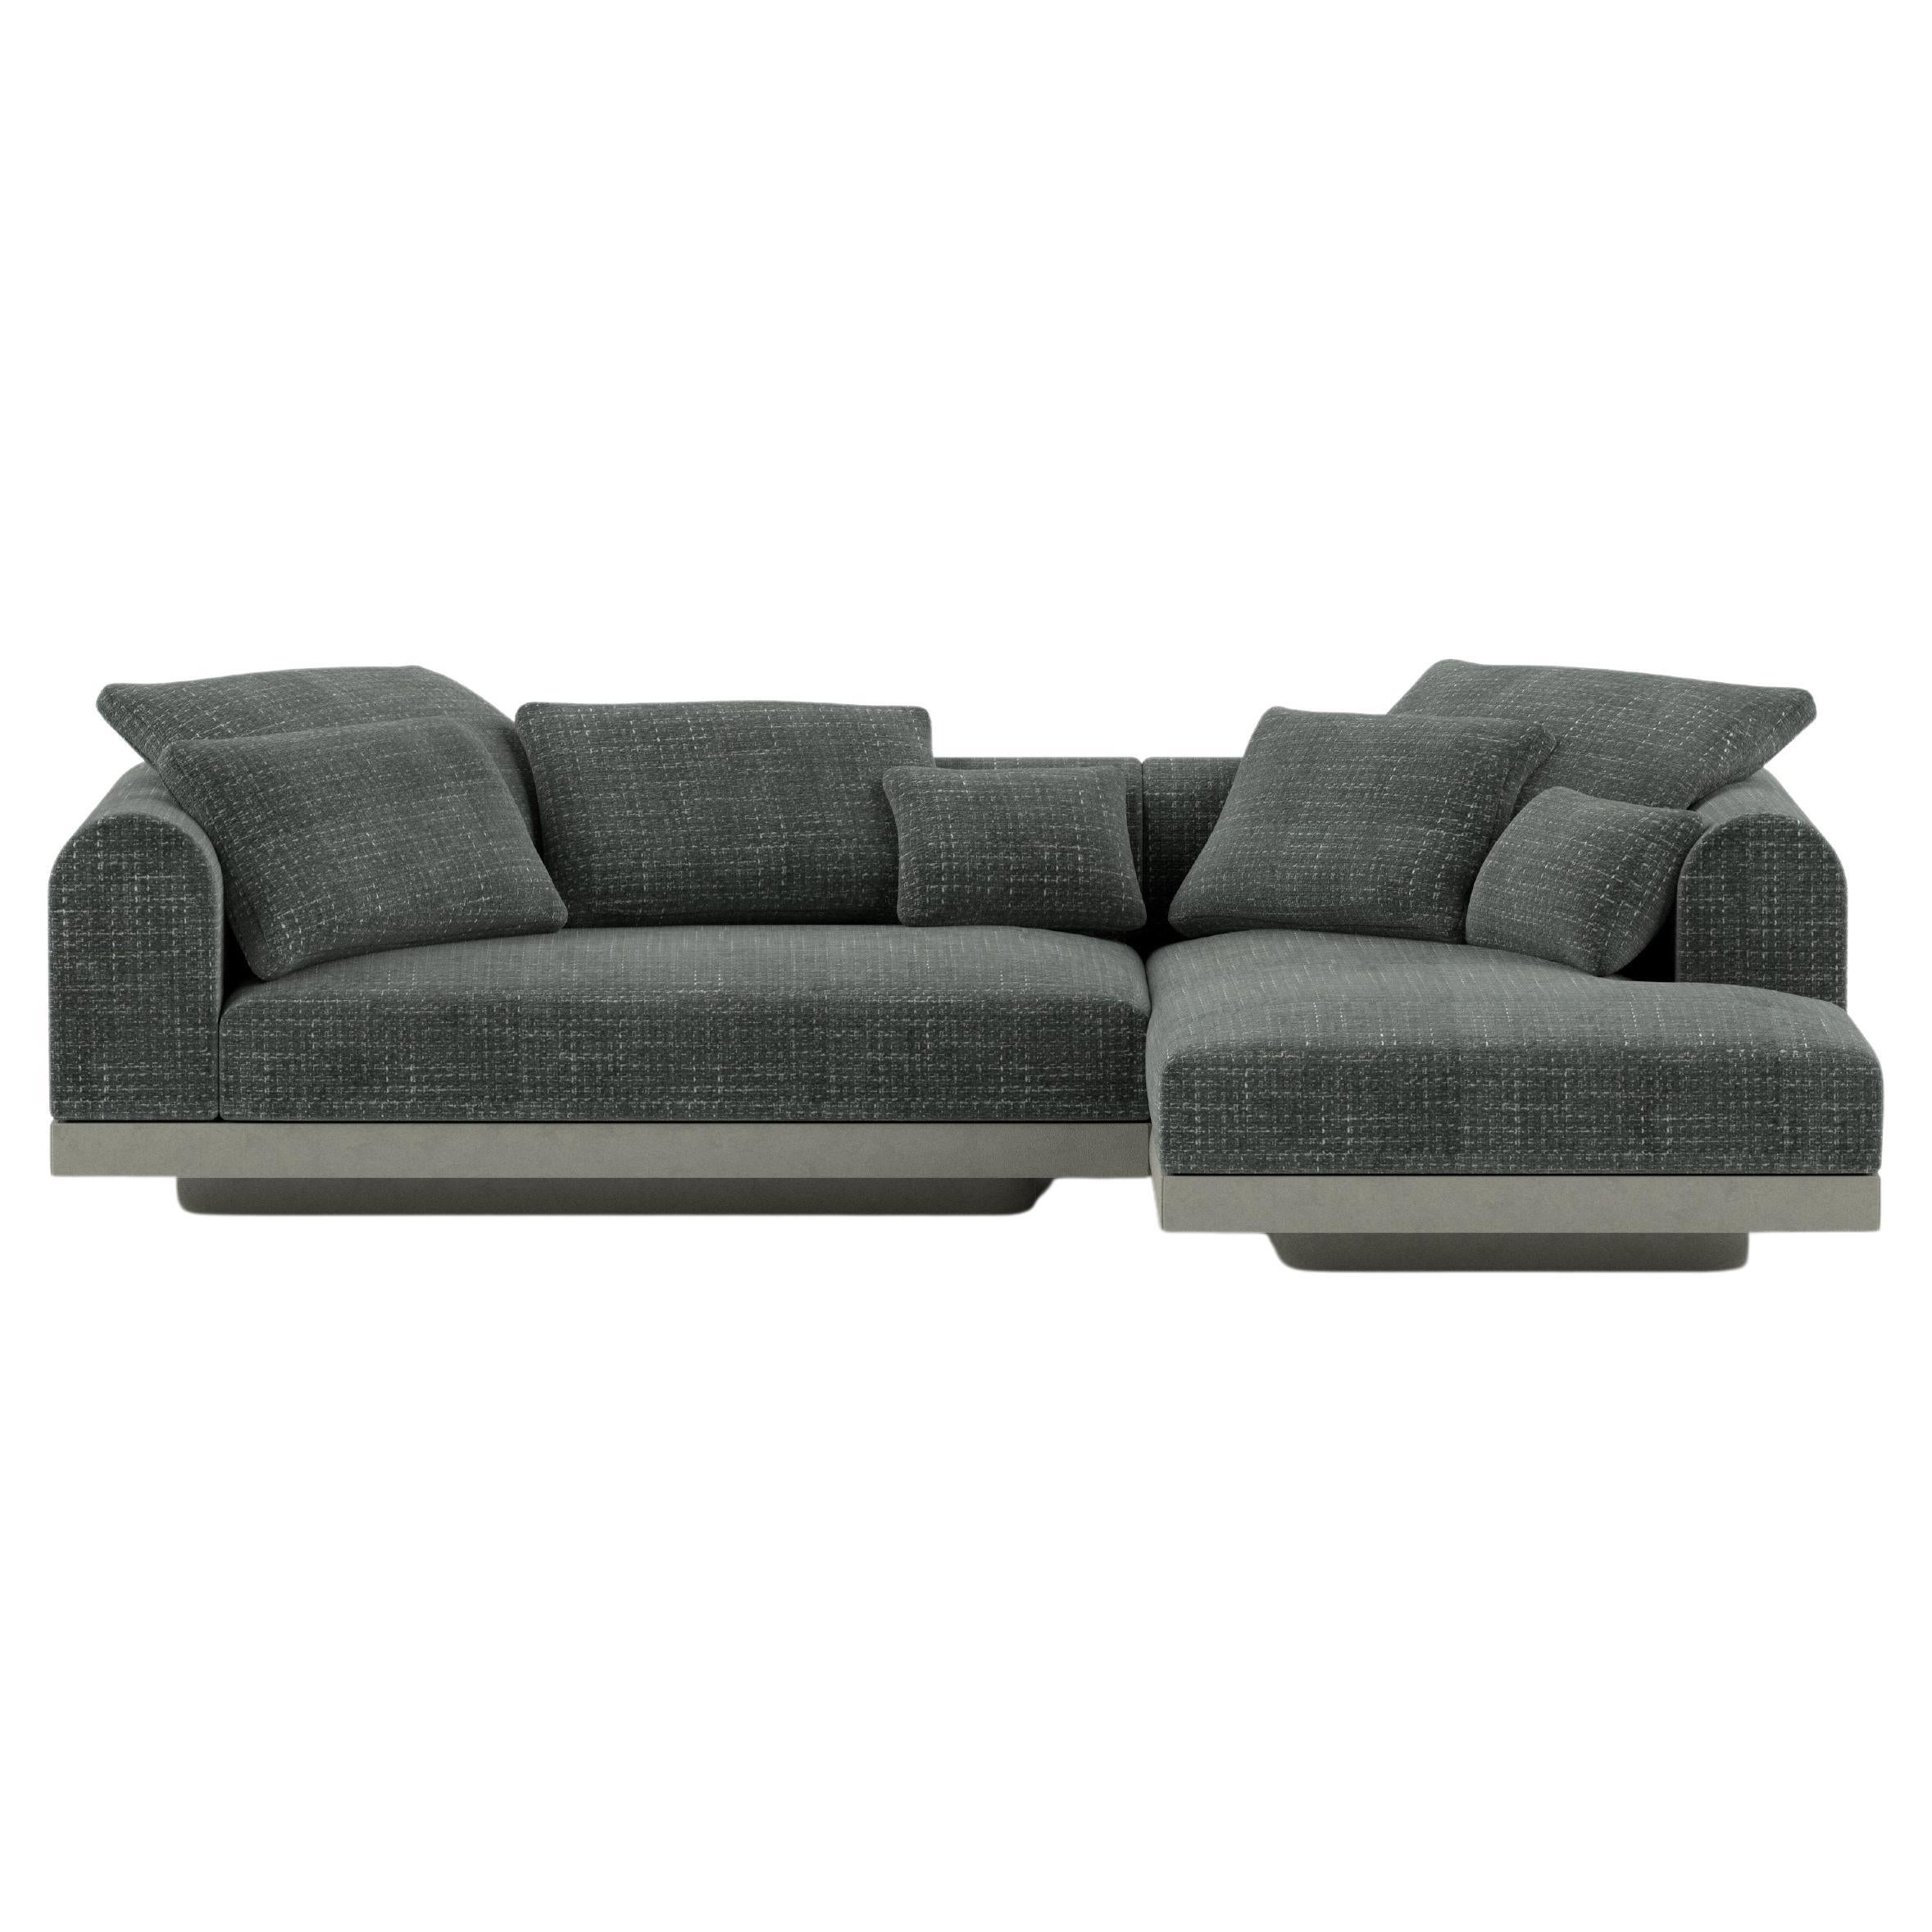 'Aqueduct' Contemporary Sofa by Poiat, Setup 1, Yang 95, High Plinth